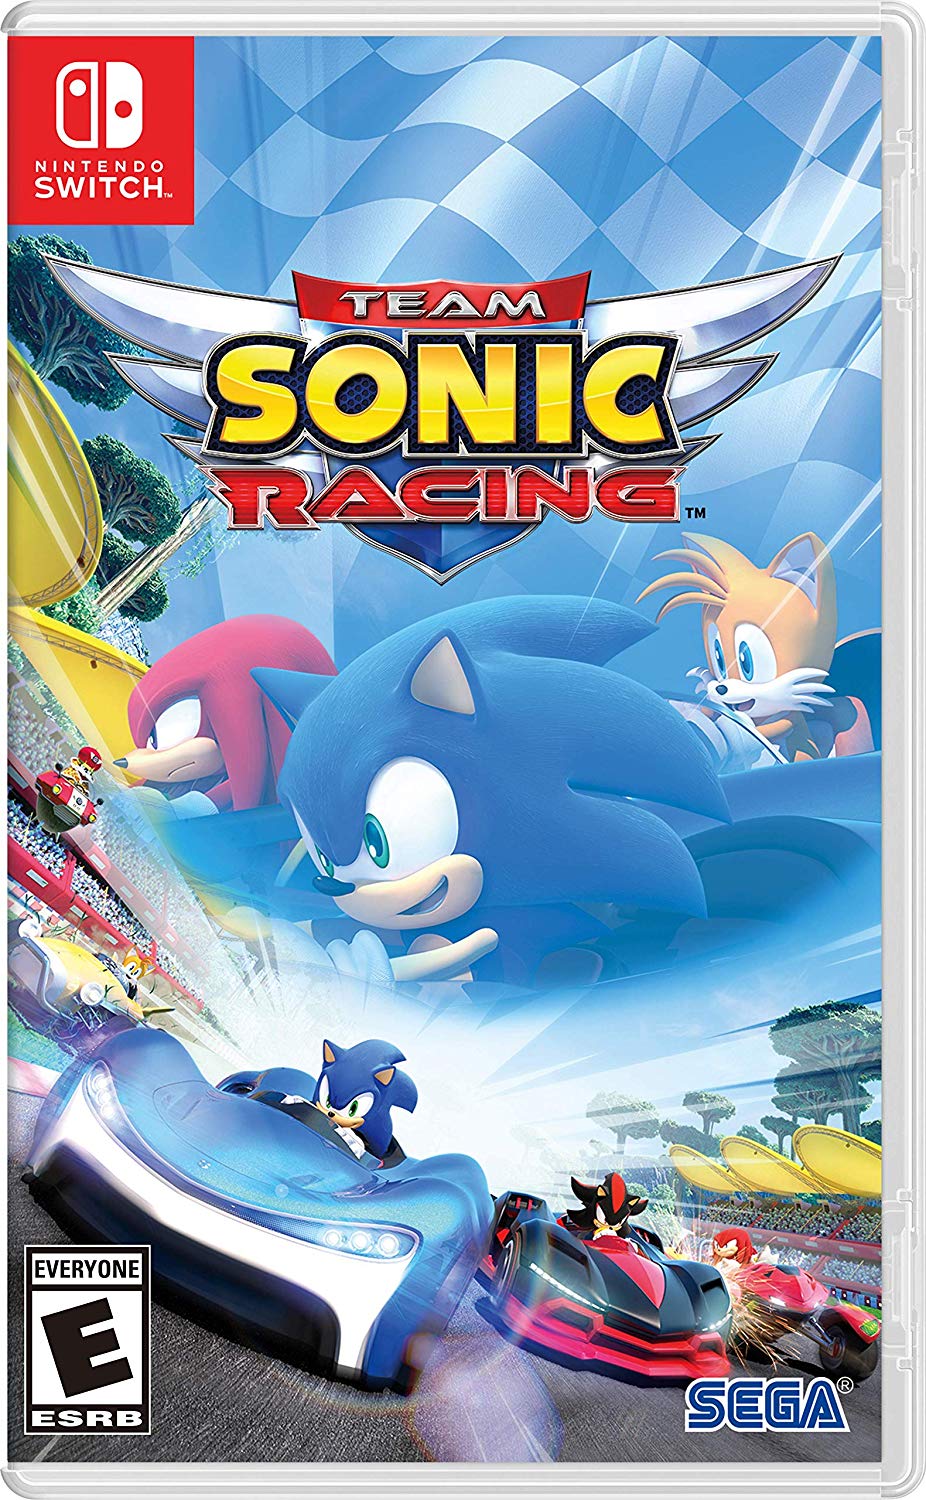 Team Sonic Racing - Nintendo Switch, Xbox One, PS4 [Disc] $19.99